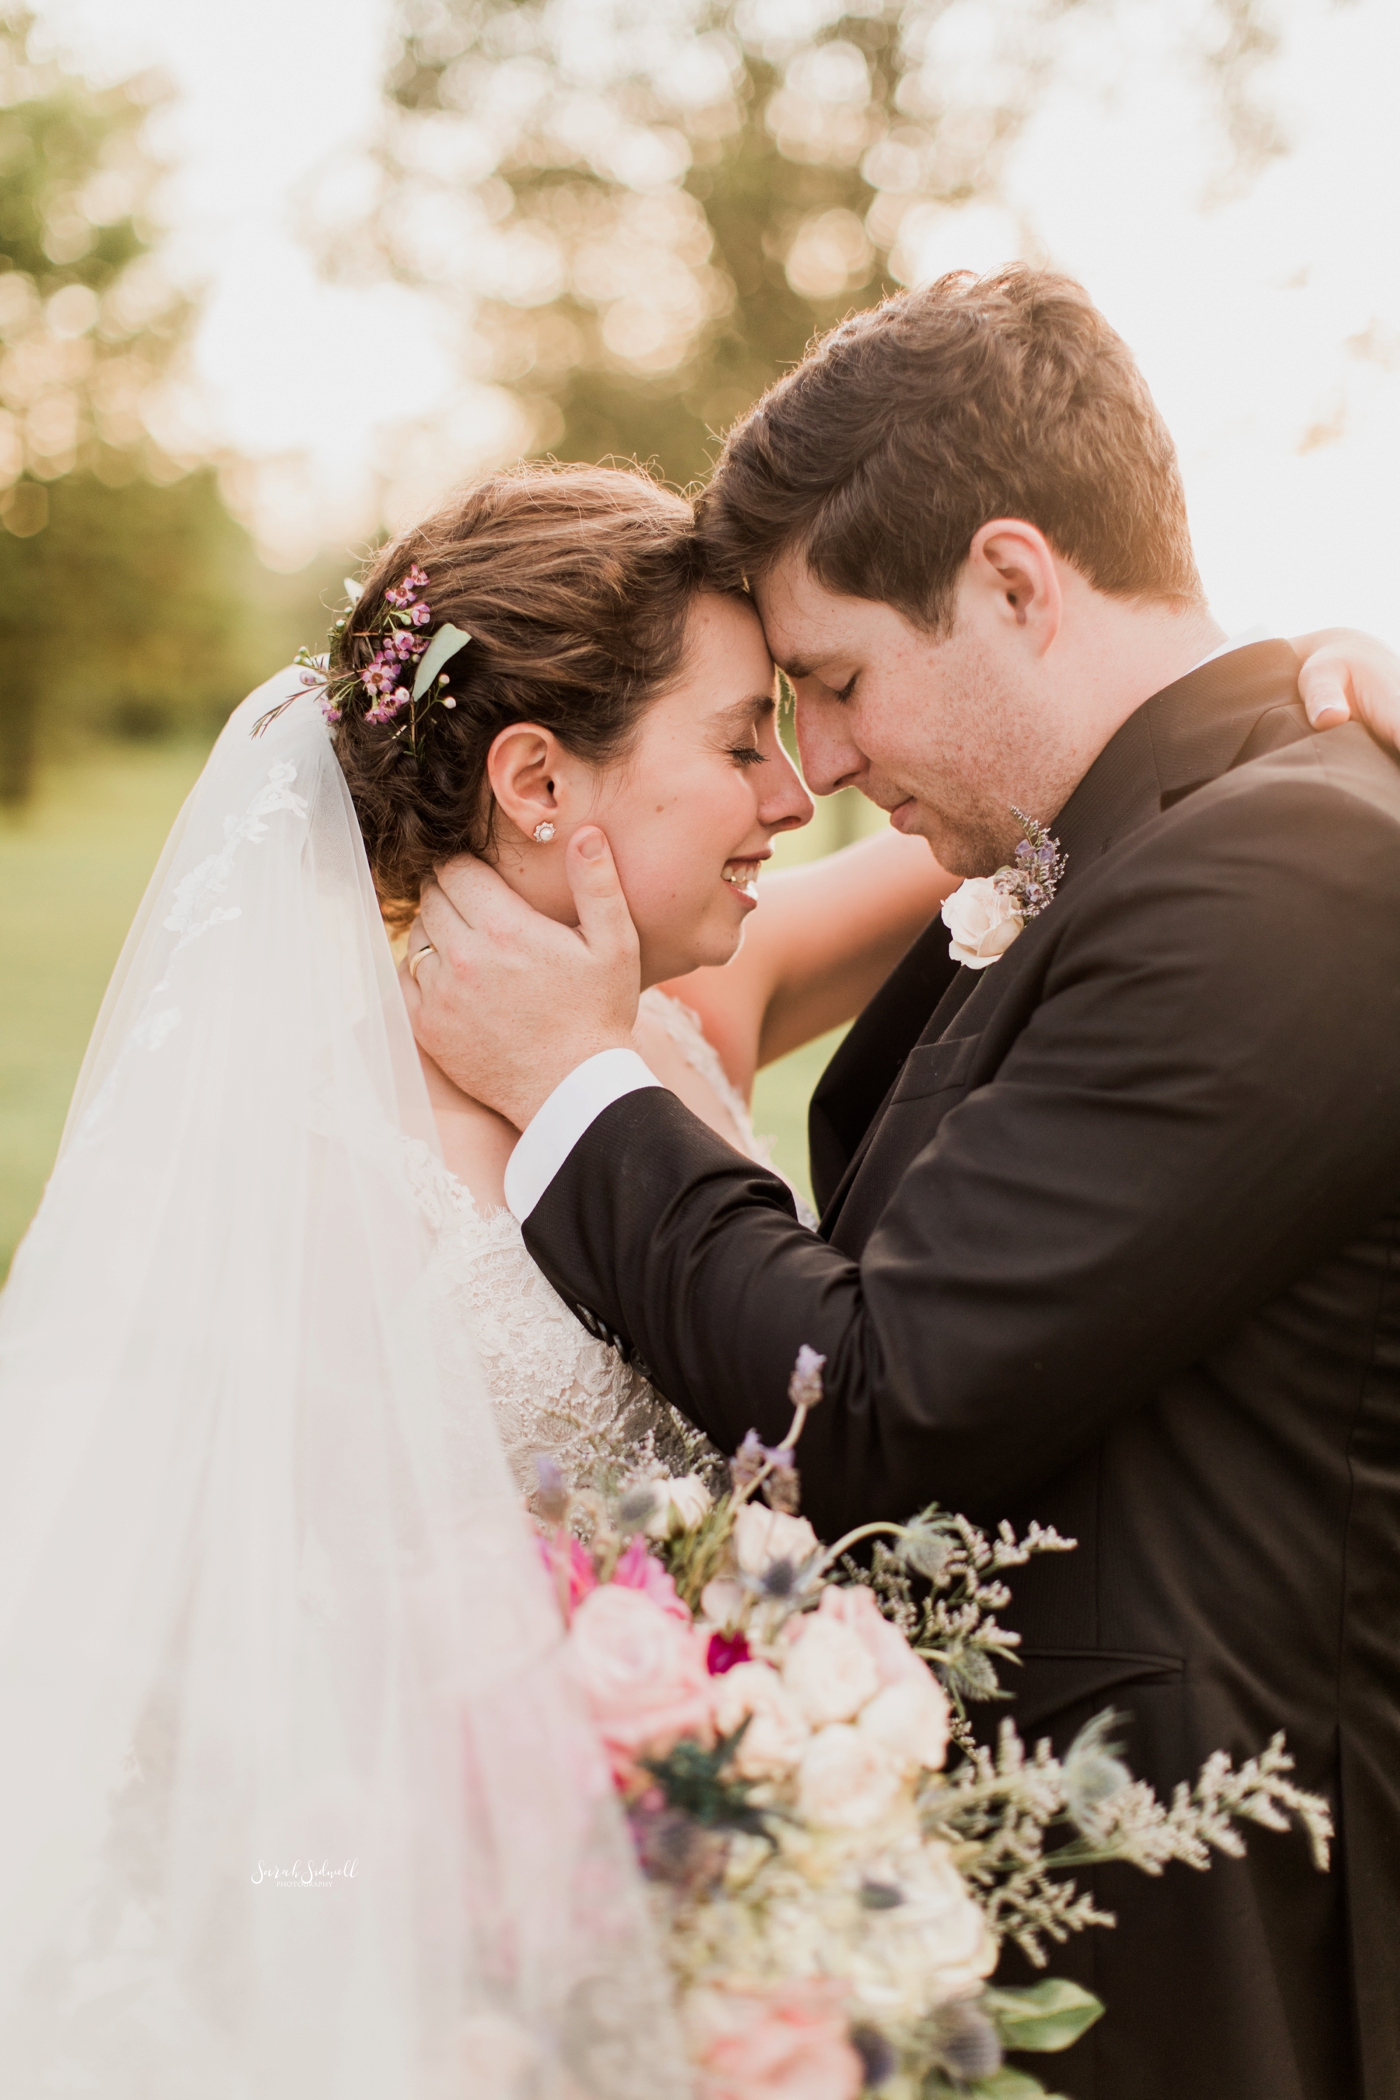 A man kisses his bride at their wedding. 